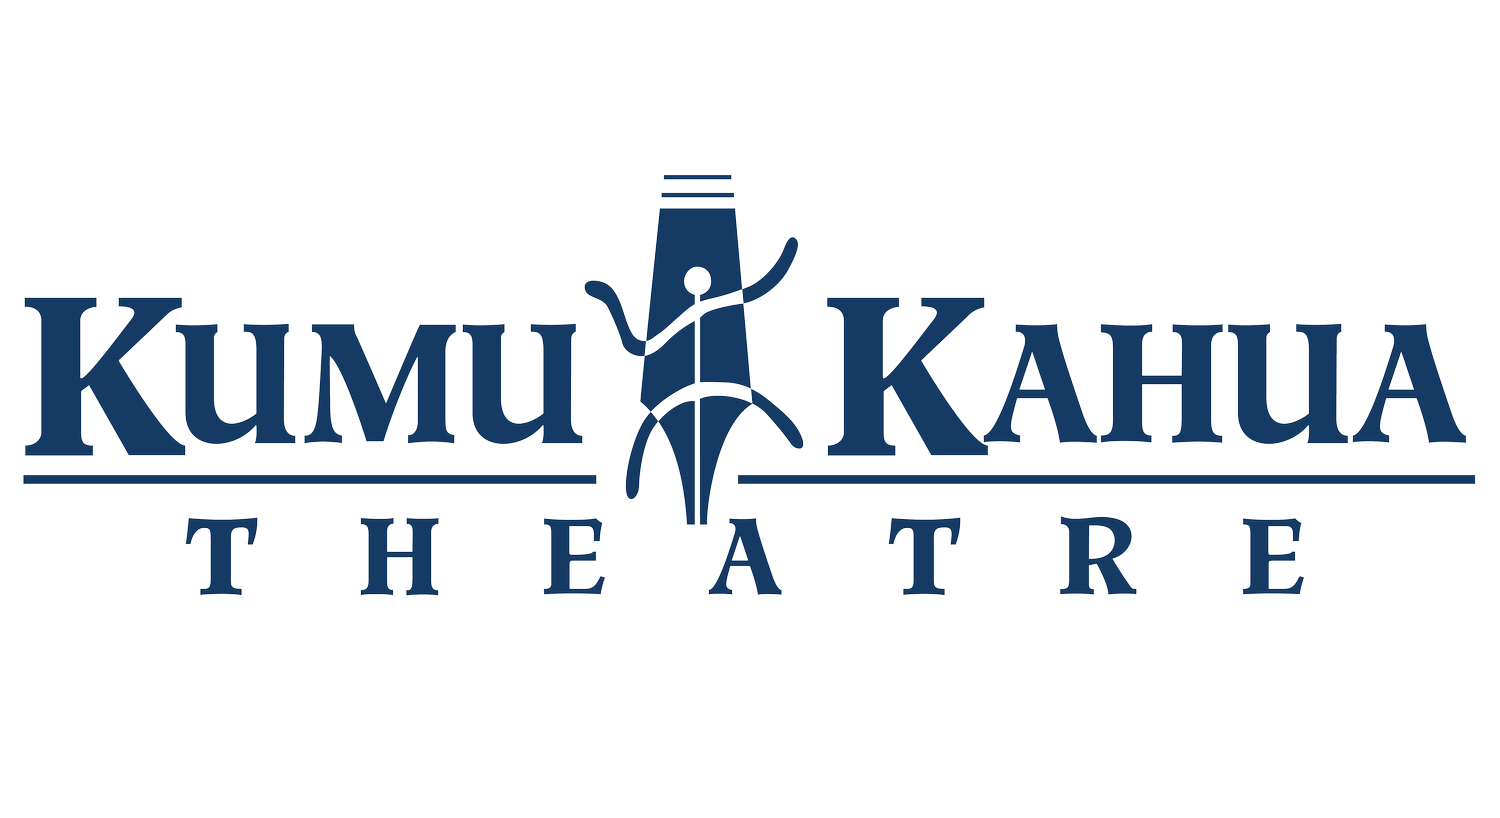 Kumu Kahua Theatre